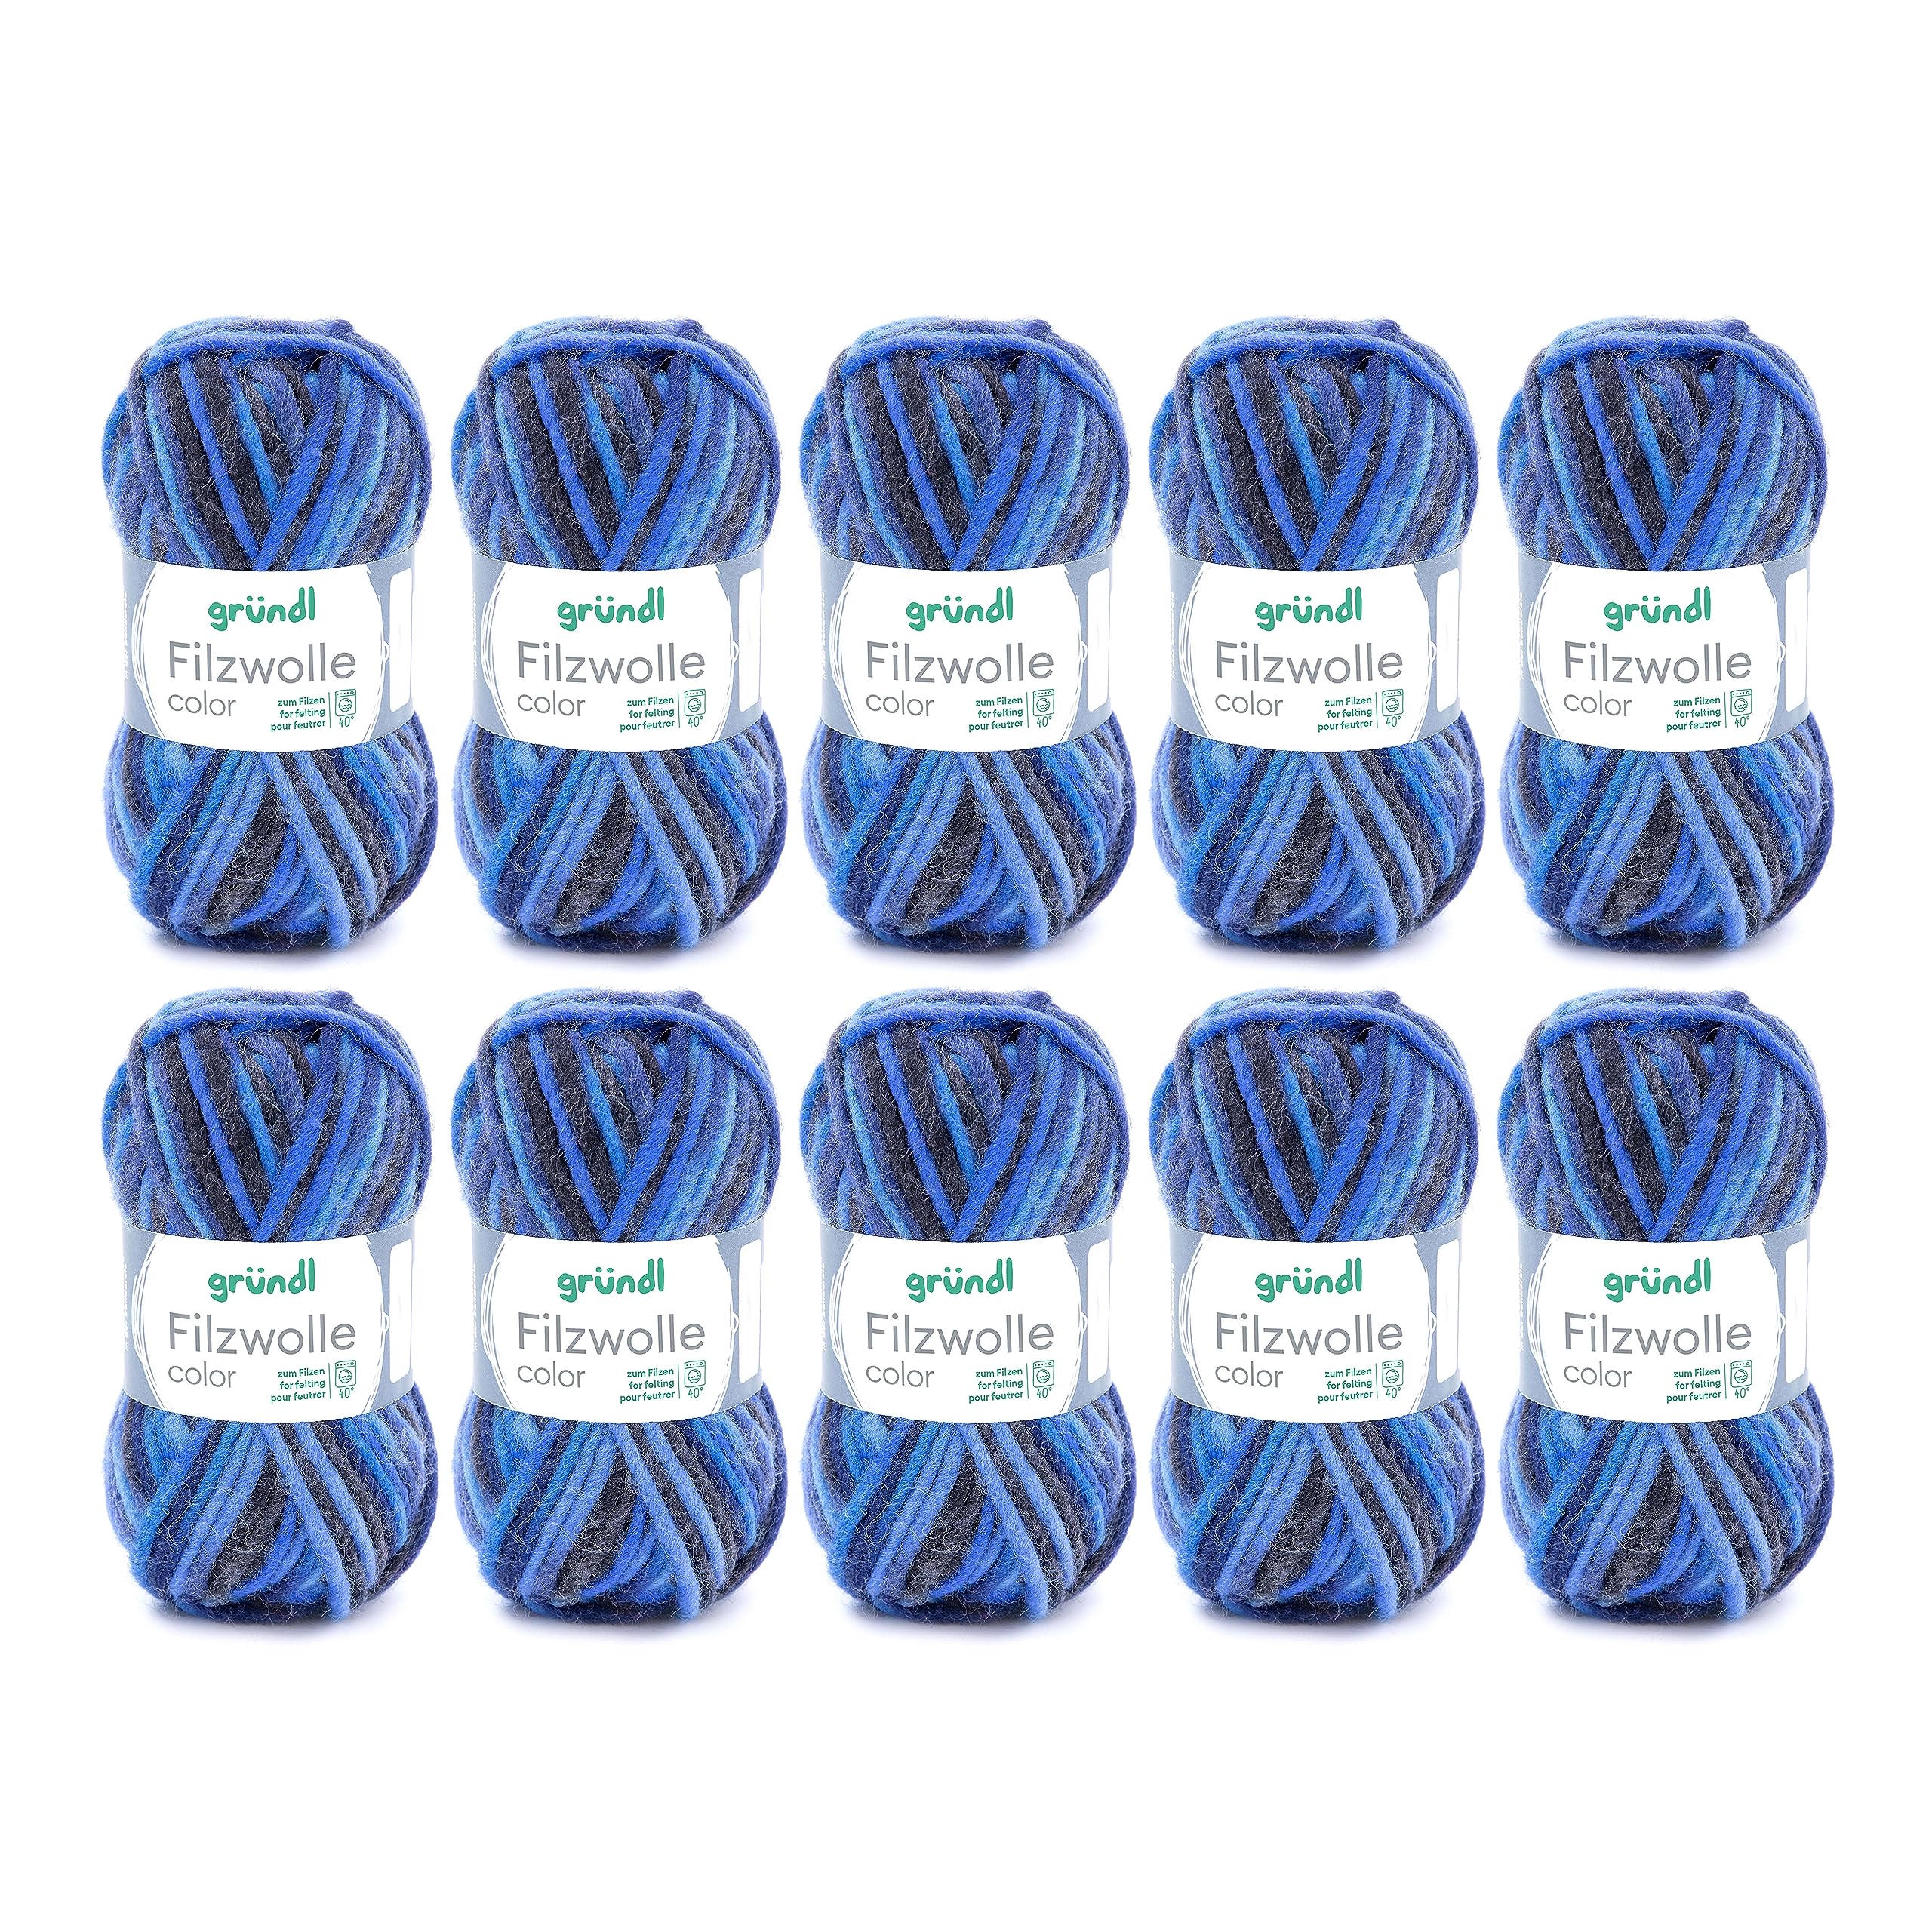 Gründl Filzwolle color, (OEKO-TEX zertifiziert, 100 % Schurwolle zum Filzen, 50 g / 50 m, Nadelstärke: 8 - 9, 10 Knäuel á 50 g), blau-anthrazit Multicolor, 31 x 32 x 6 cm